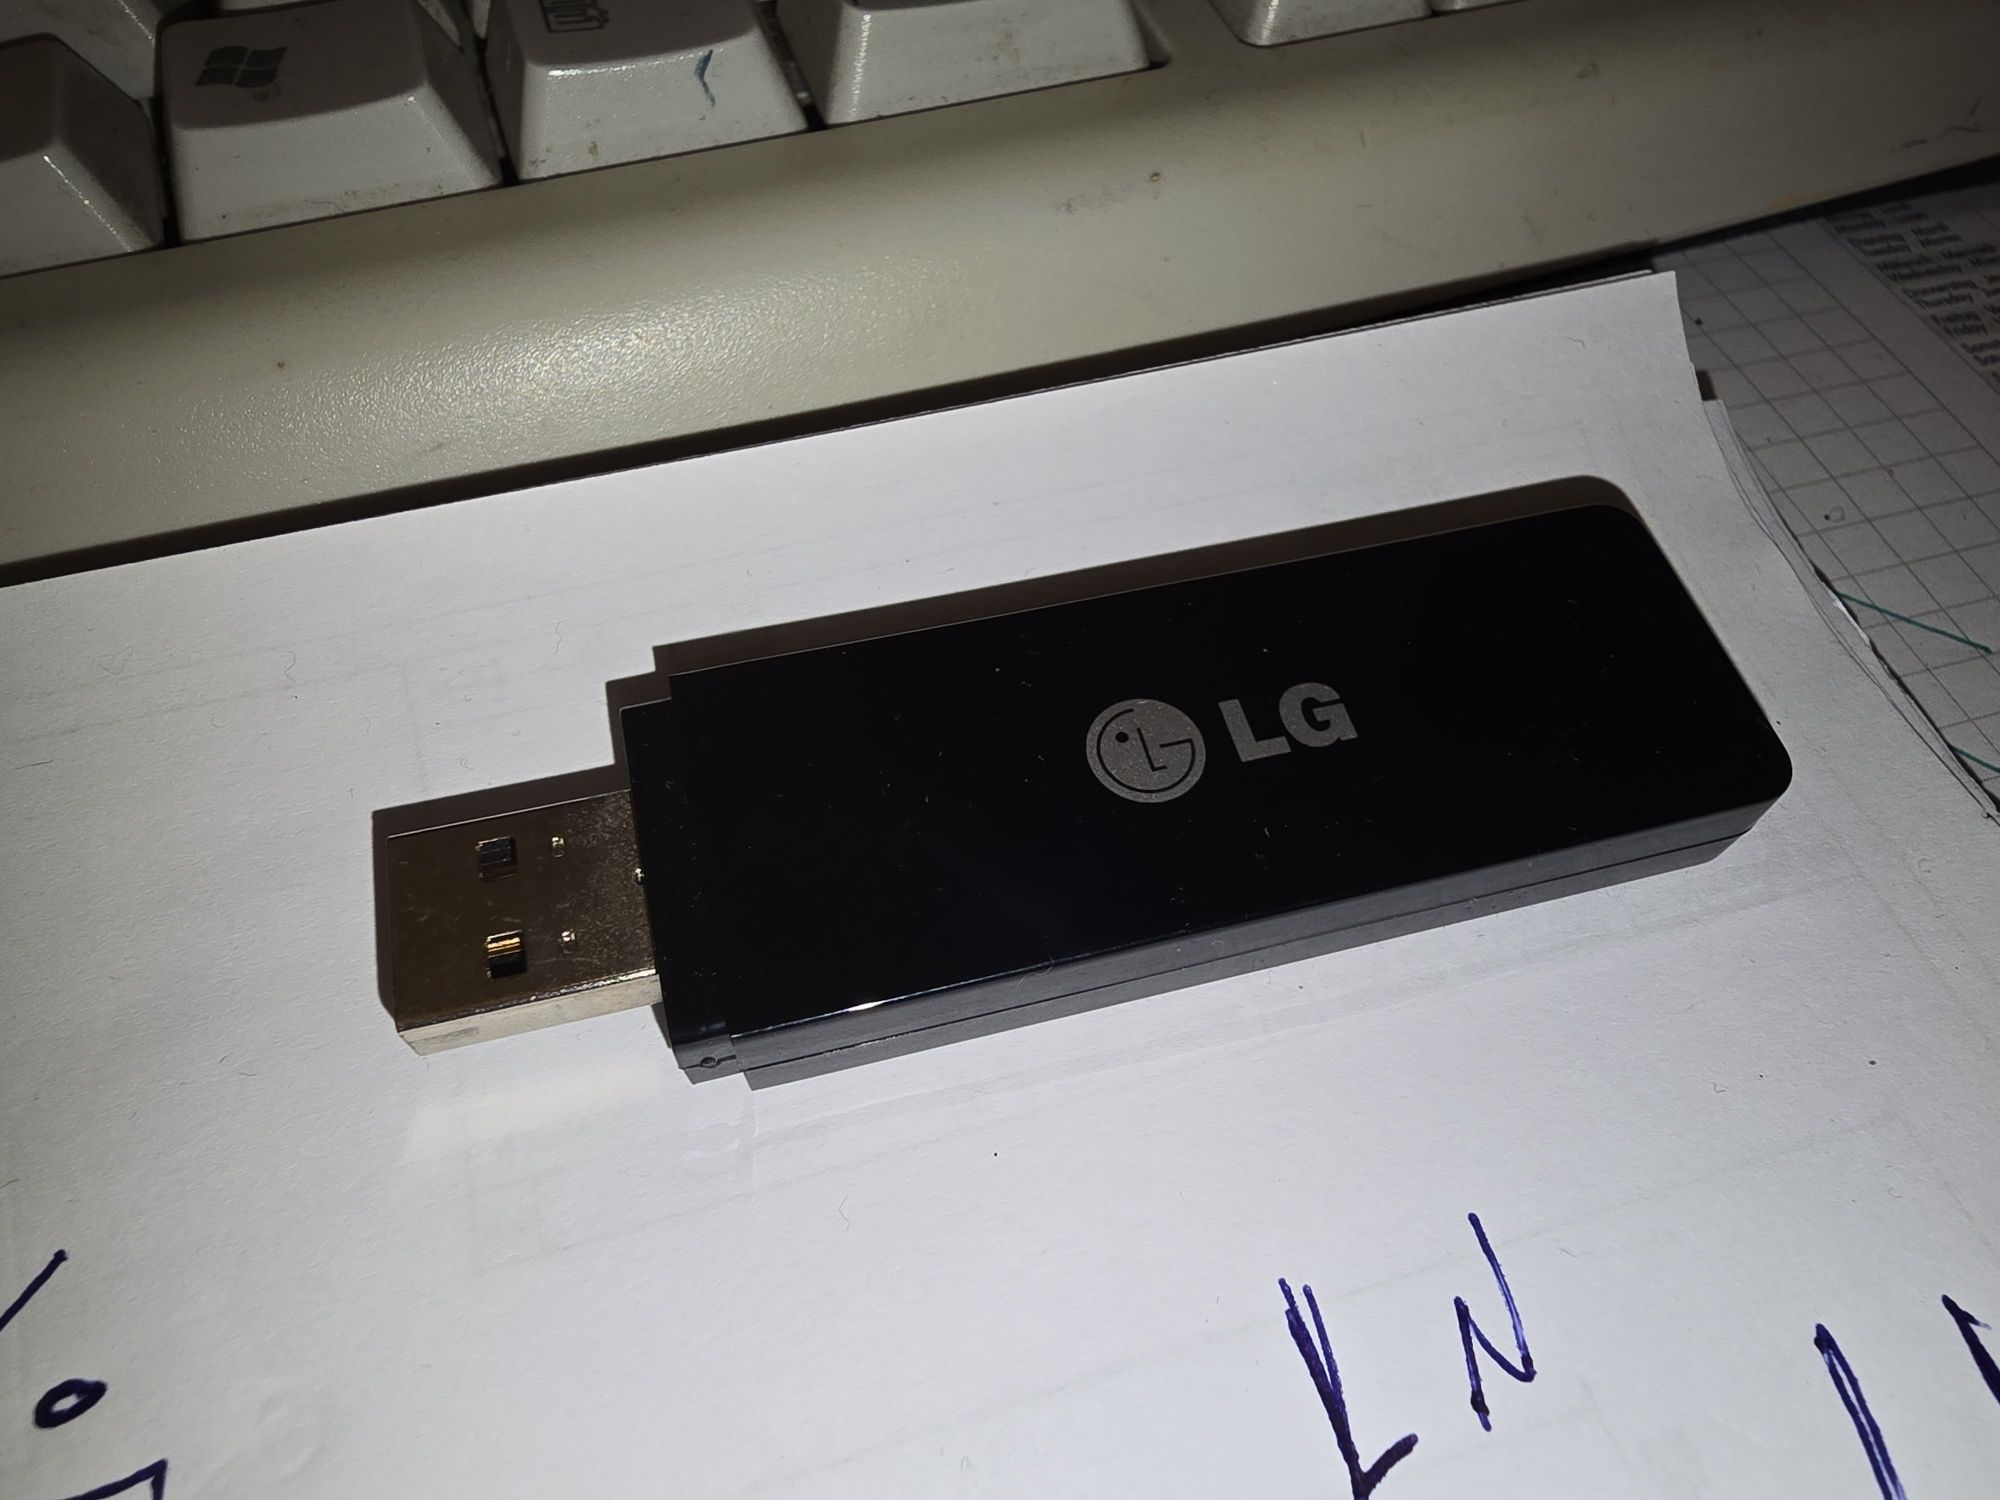 Pen USB wifi / wireless LG para TV / WIFI DONGLE  / LG AN-WF100